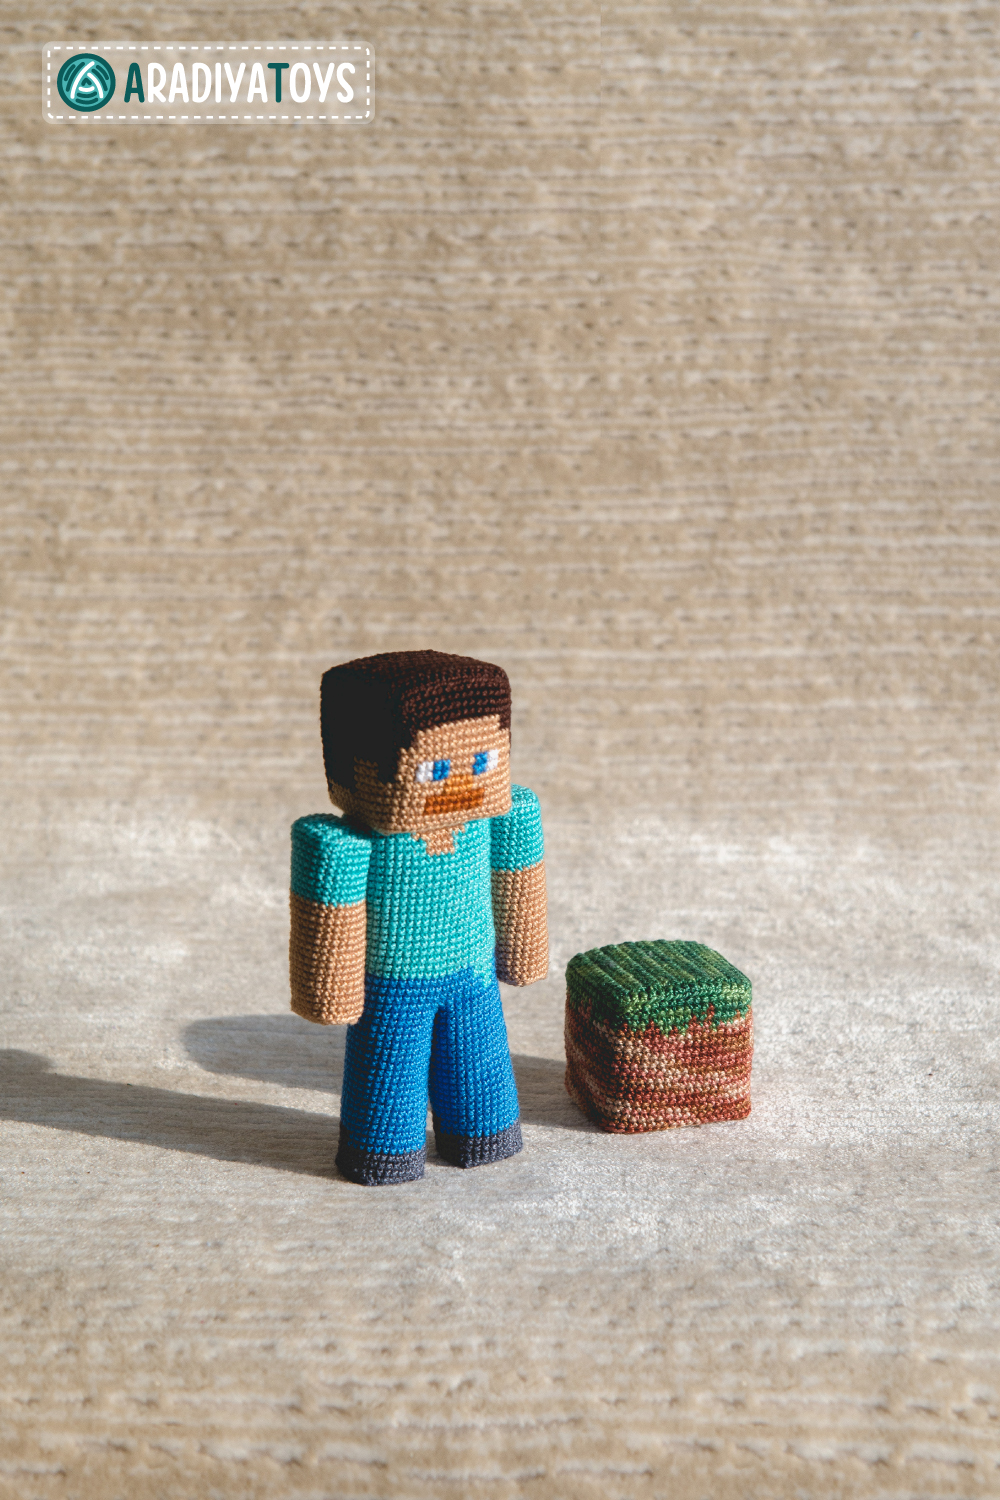 Minecraft Crochet Dolls, In Case The Original In-Game Creatures Weren’t Charming Enough